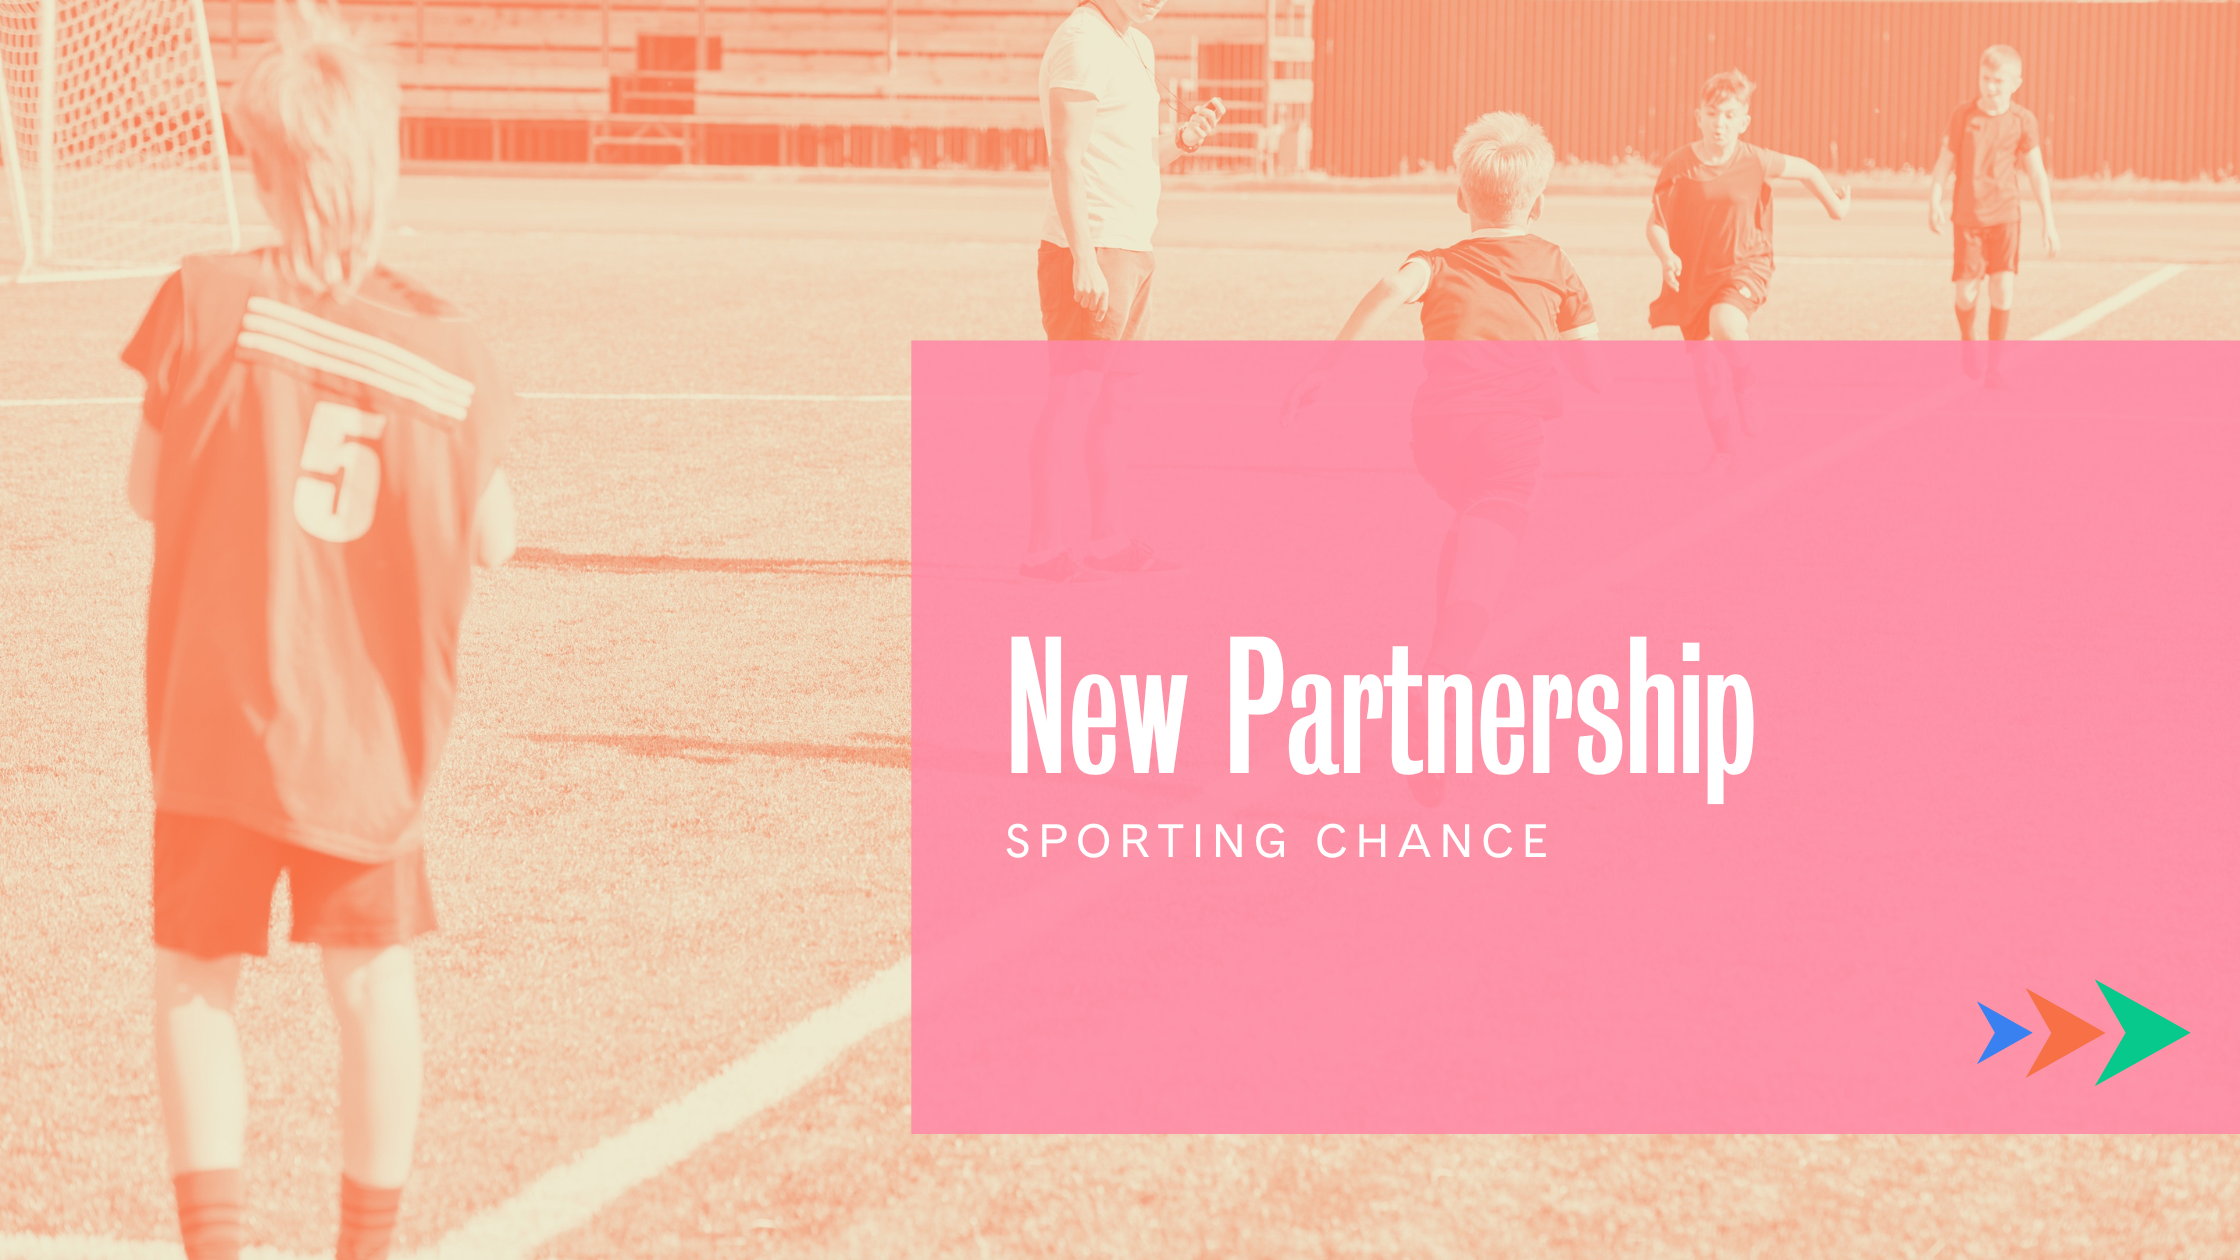 New Partnership – Sporting Chance